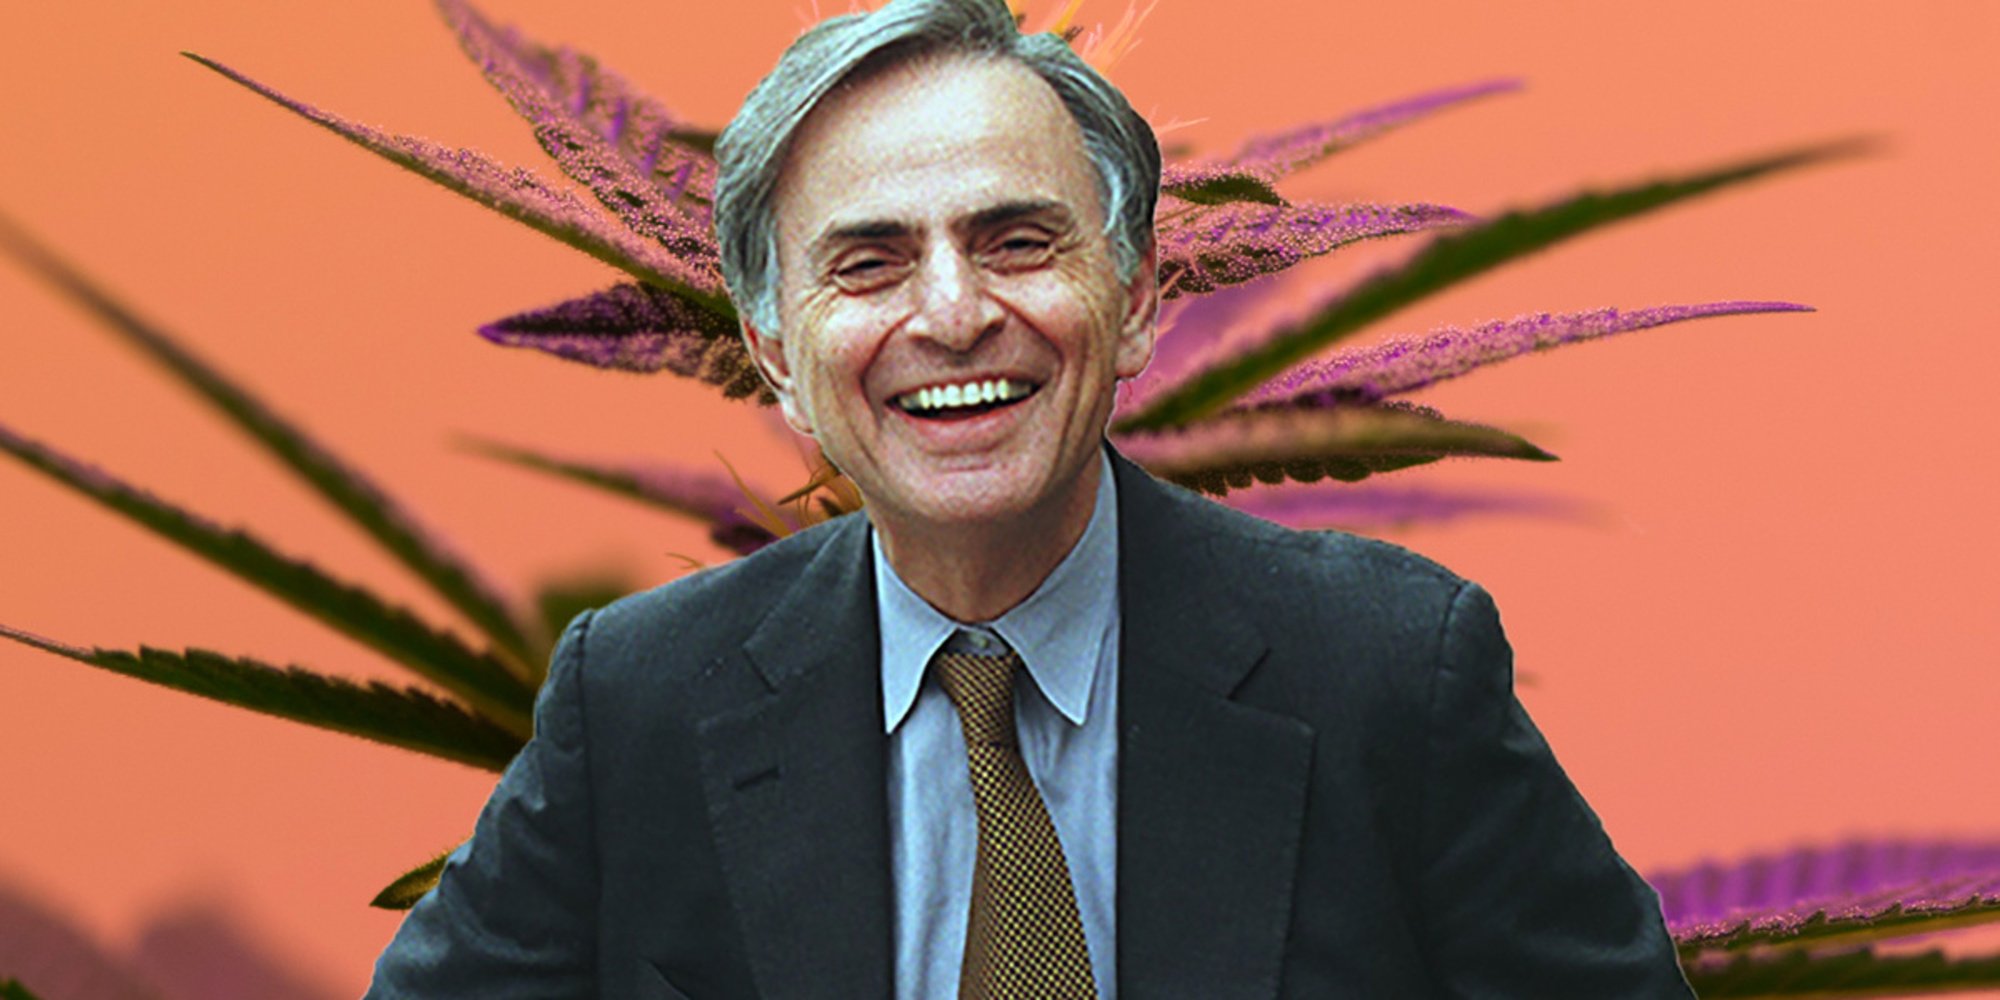 Carl Sagan on why he liked smoking marijuana